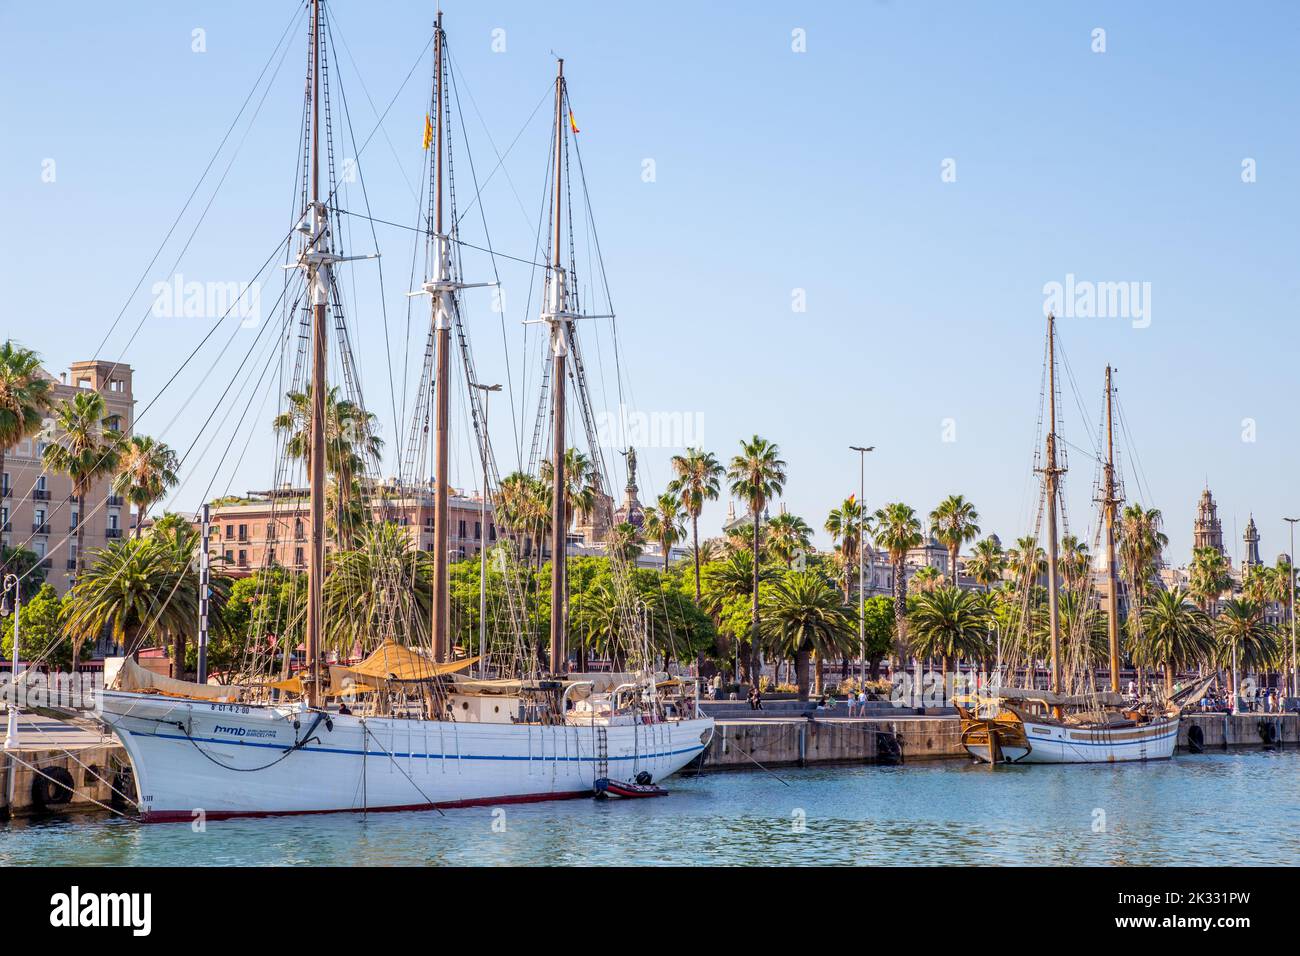 Pailebote Santa Eulàlia, Teil des Museu Marítim de Barcelona, liegt in Barcelona, Spanien Stockfoto